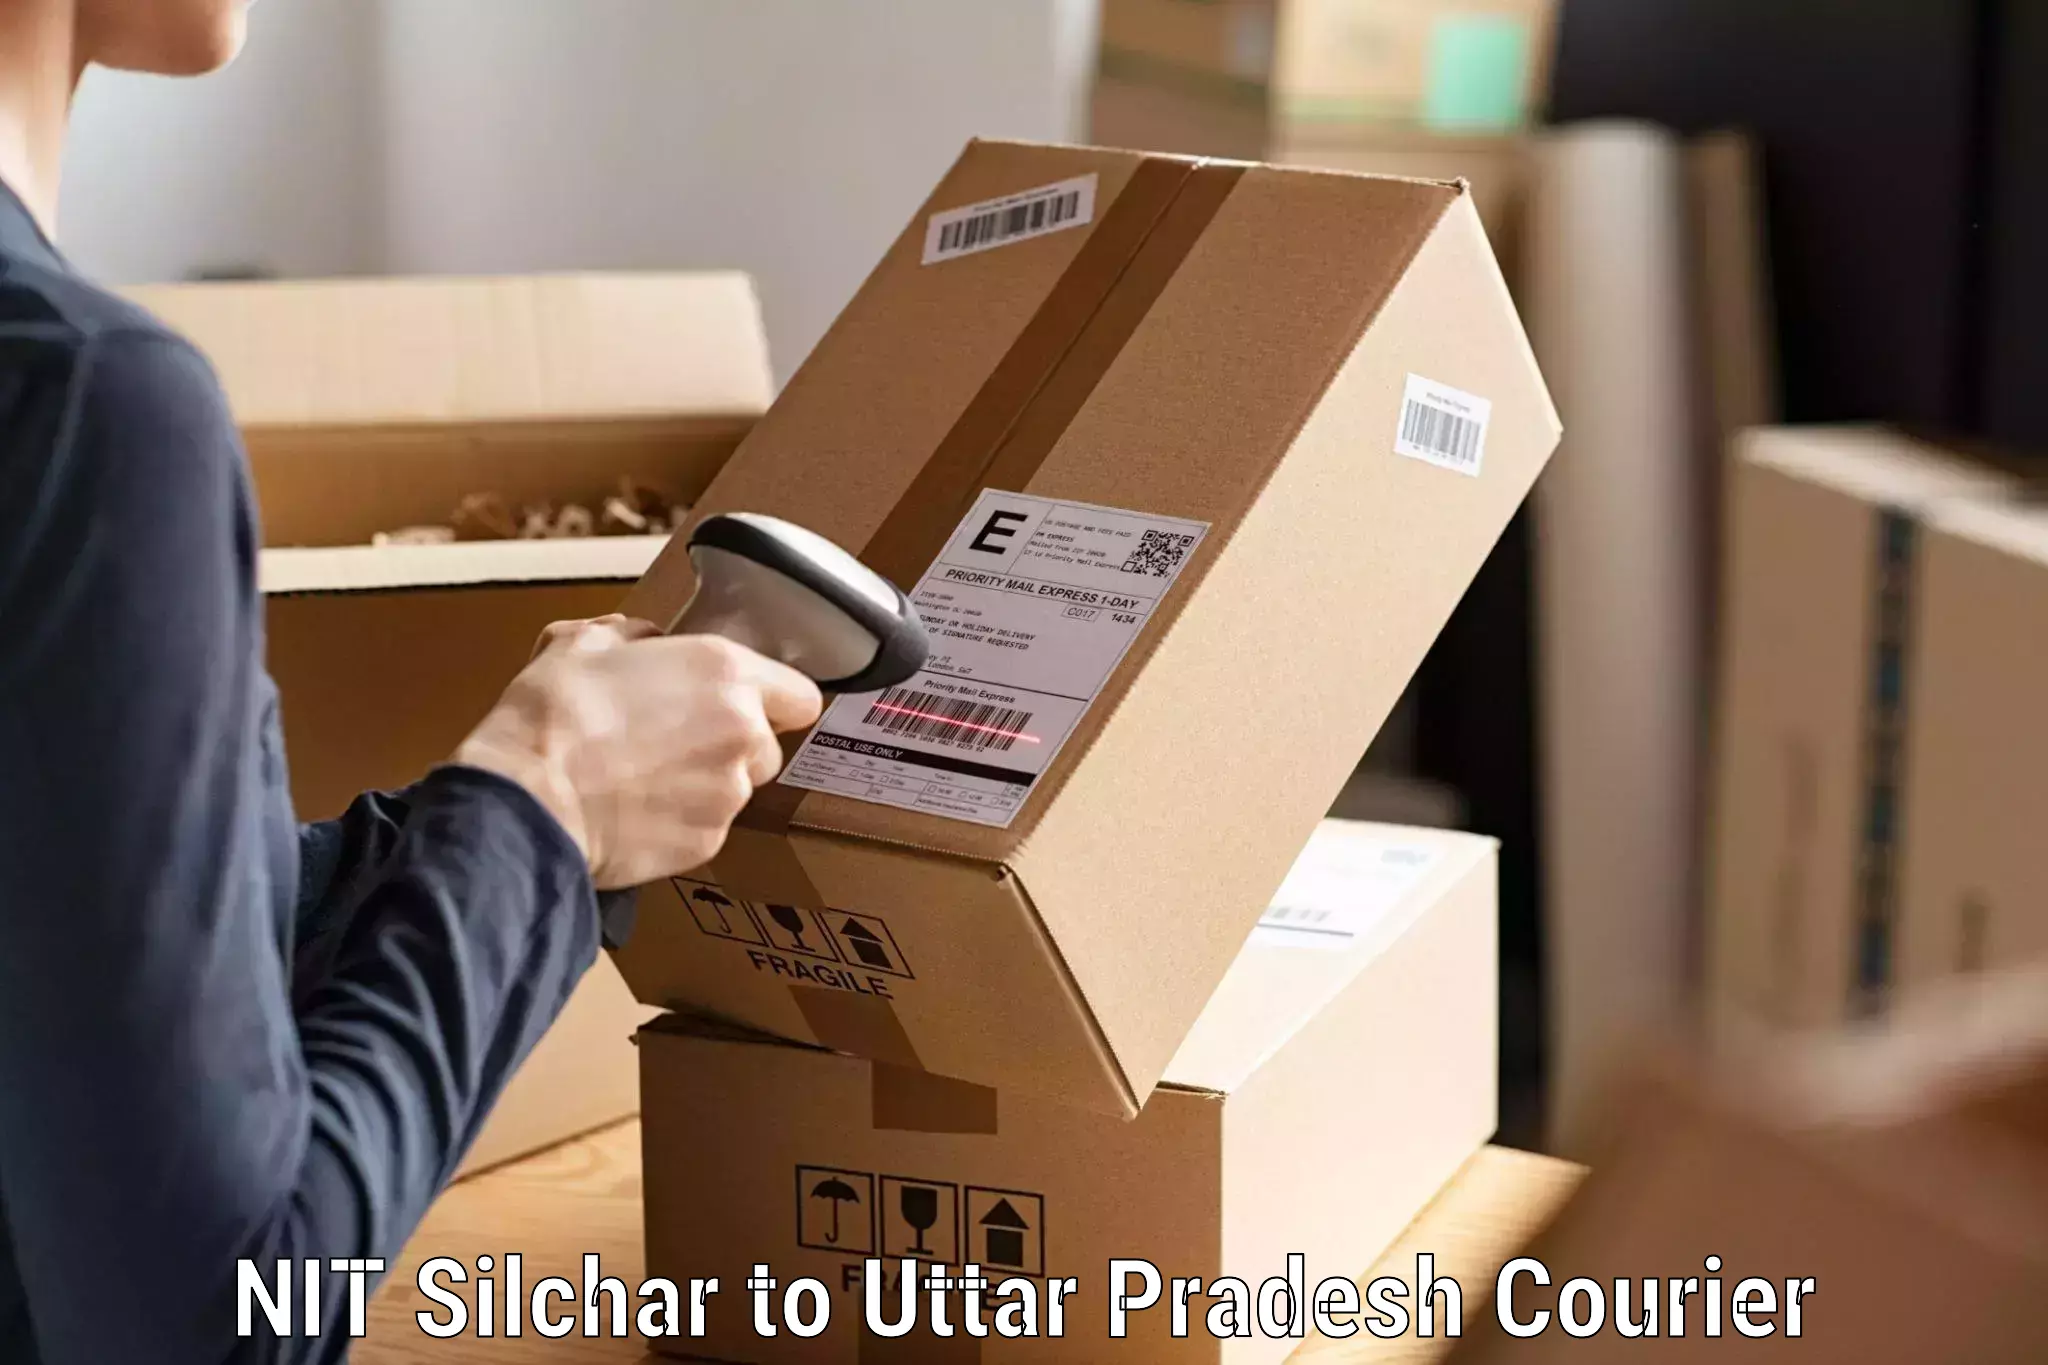 Courier service comparison NIT Silchar to Hapur